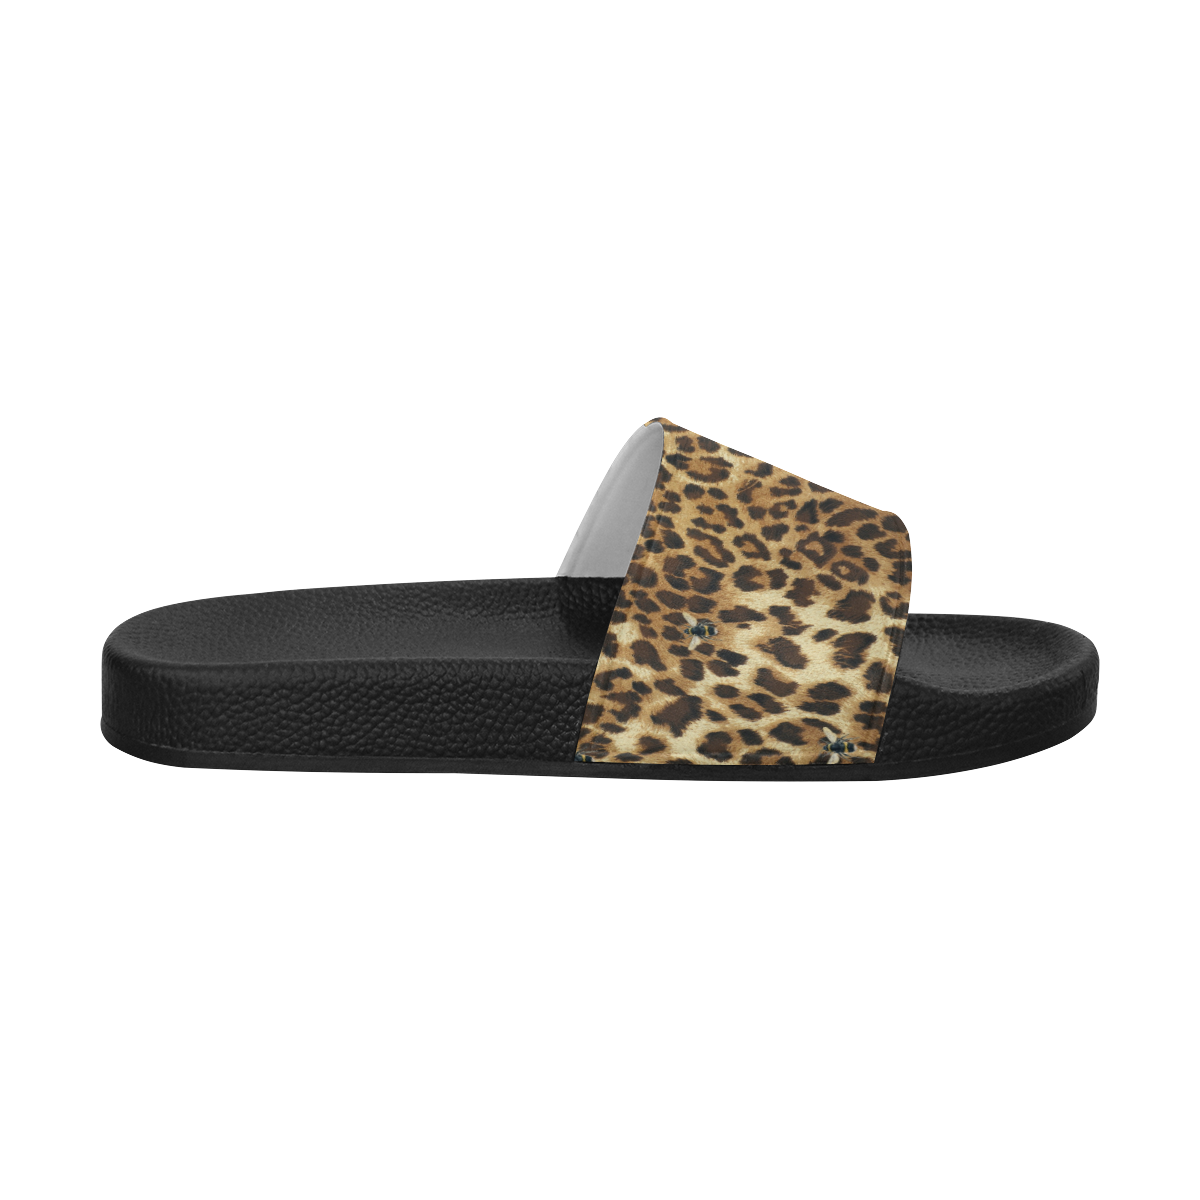 Buzz Leopard Men's Slide Sandals (Model 057)